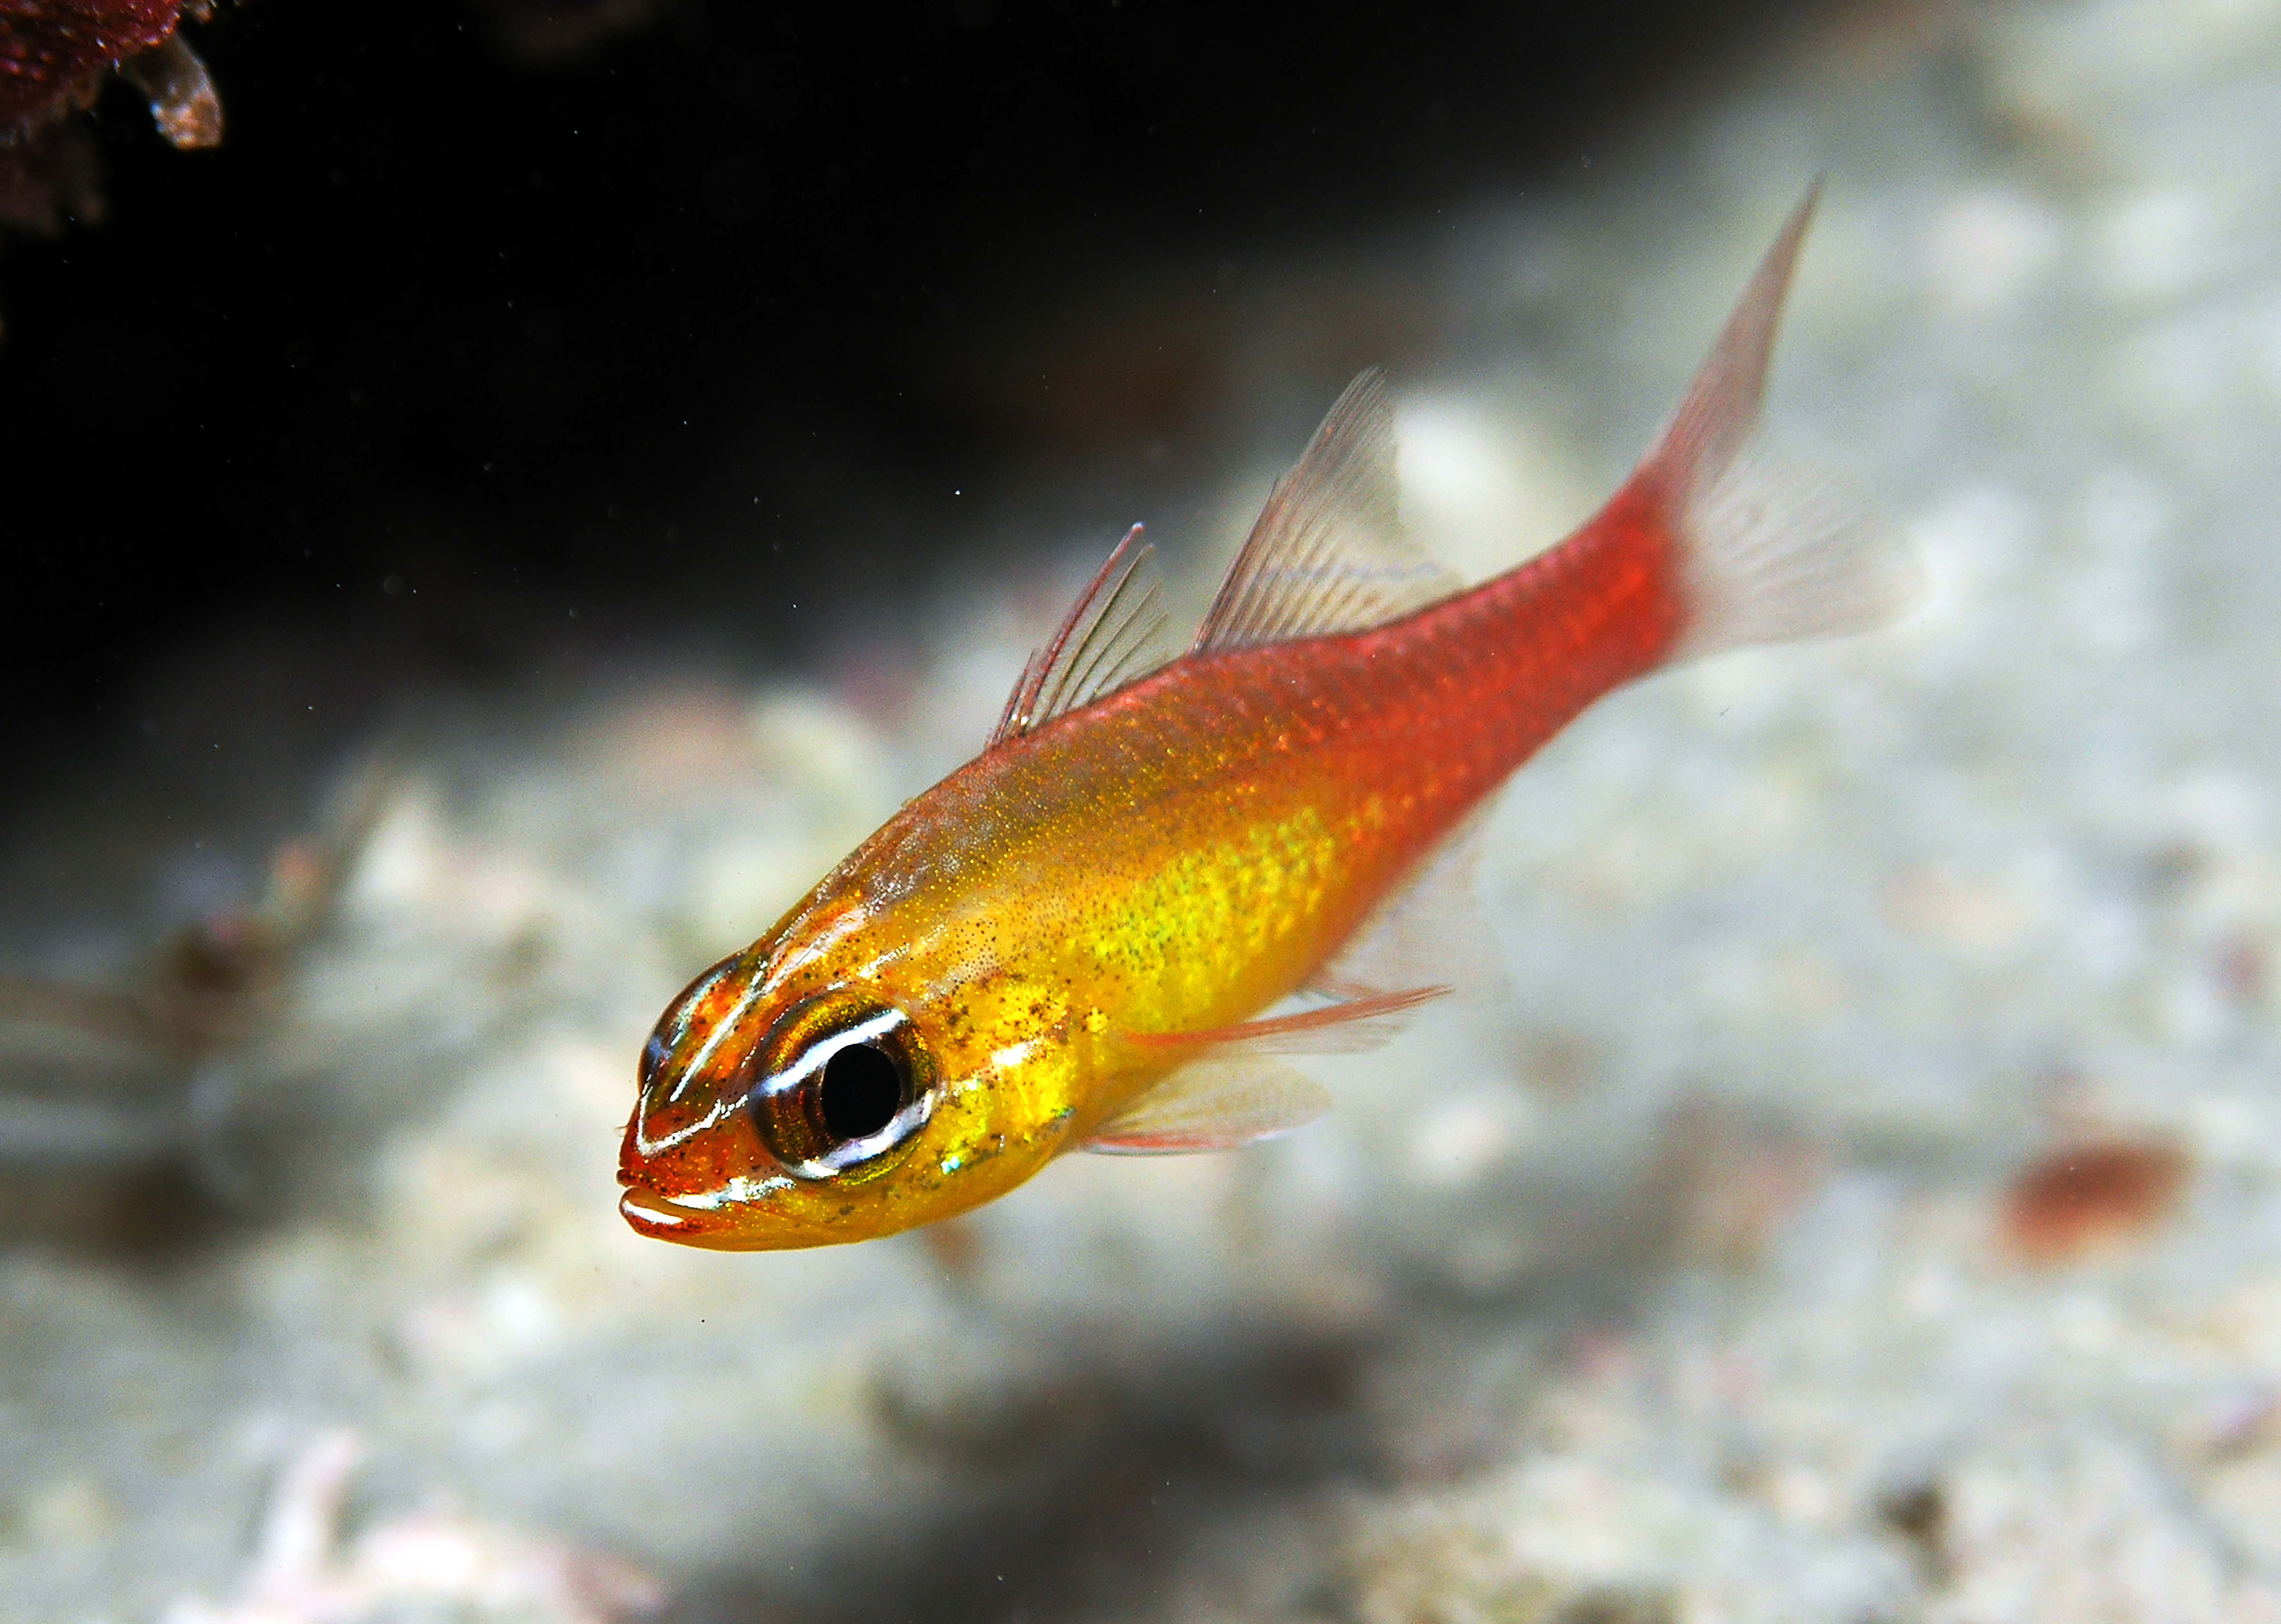 A golden orange fish swims along the bottom of the sandy ocean